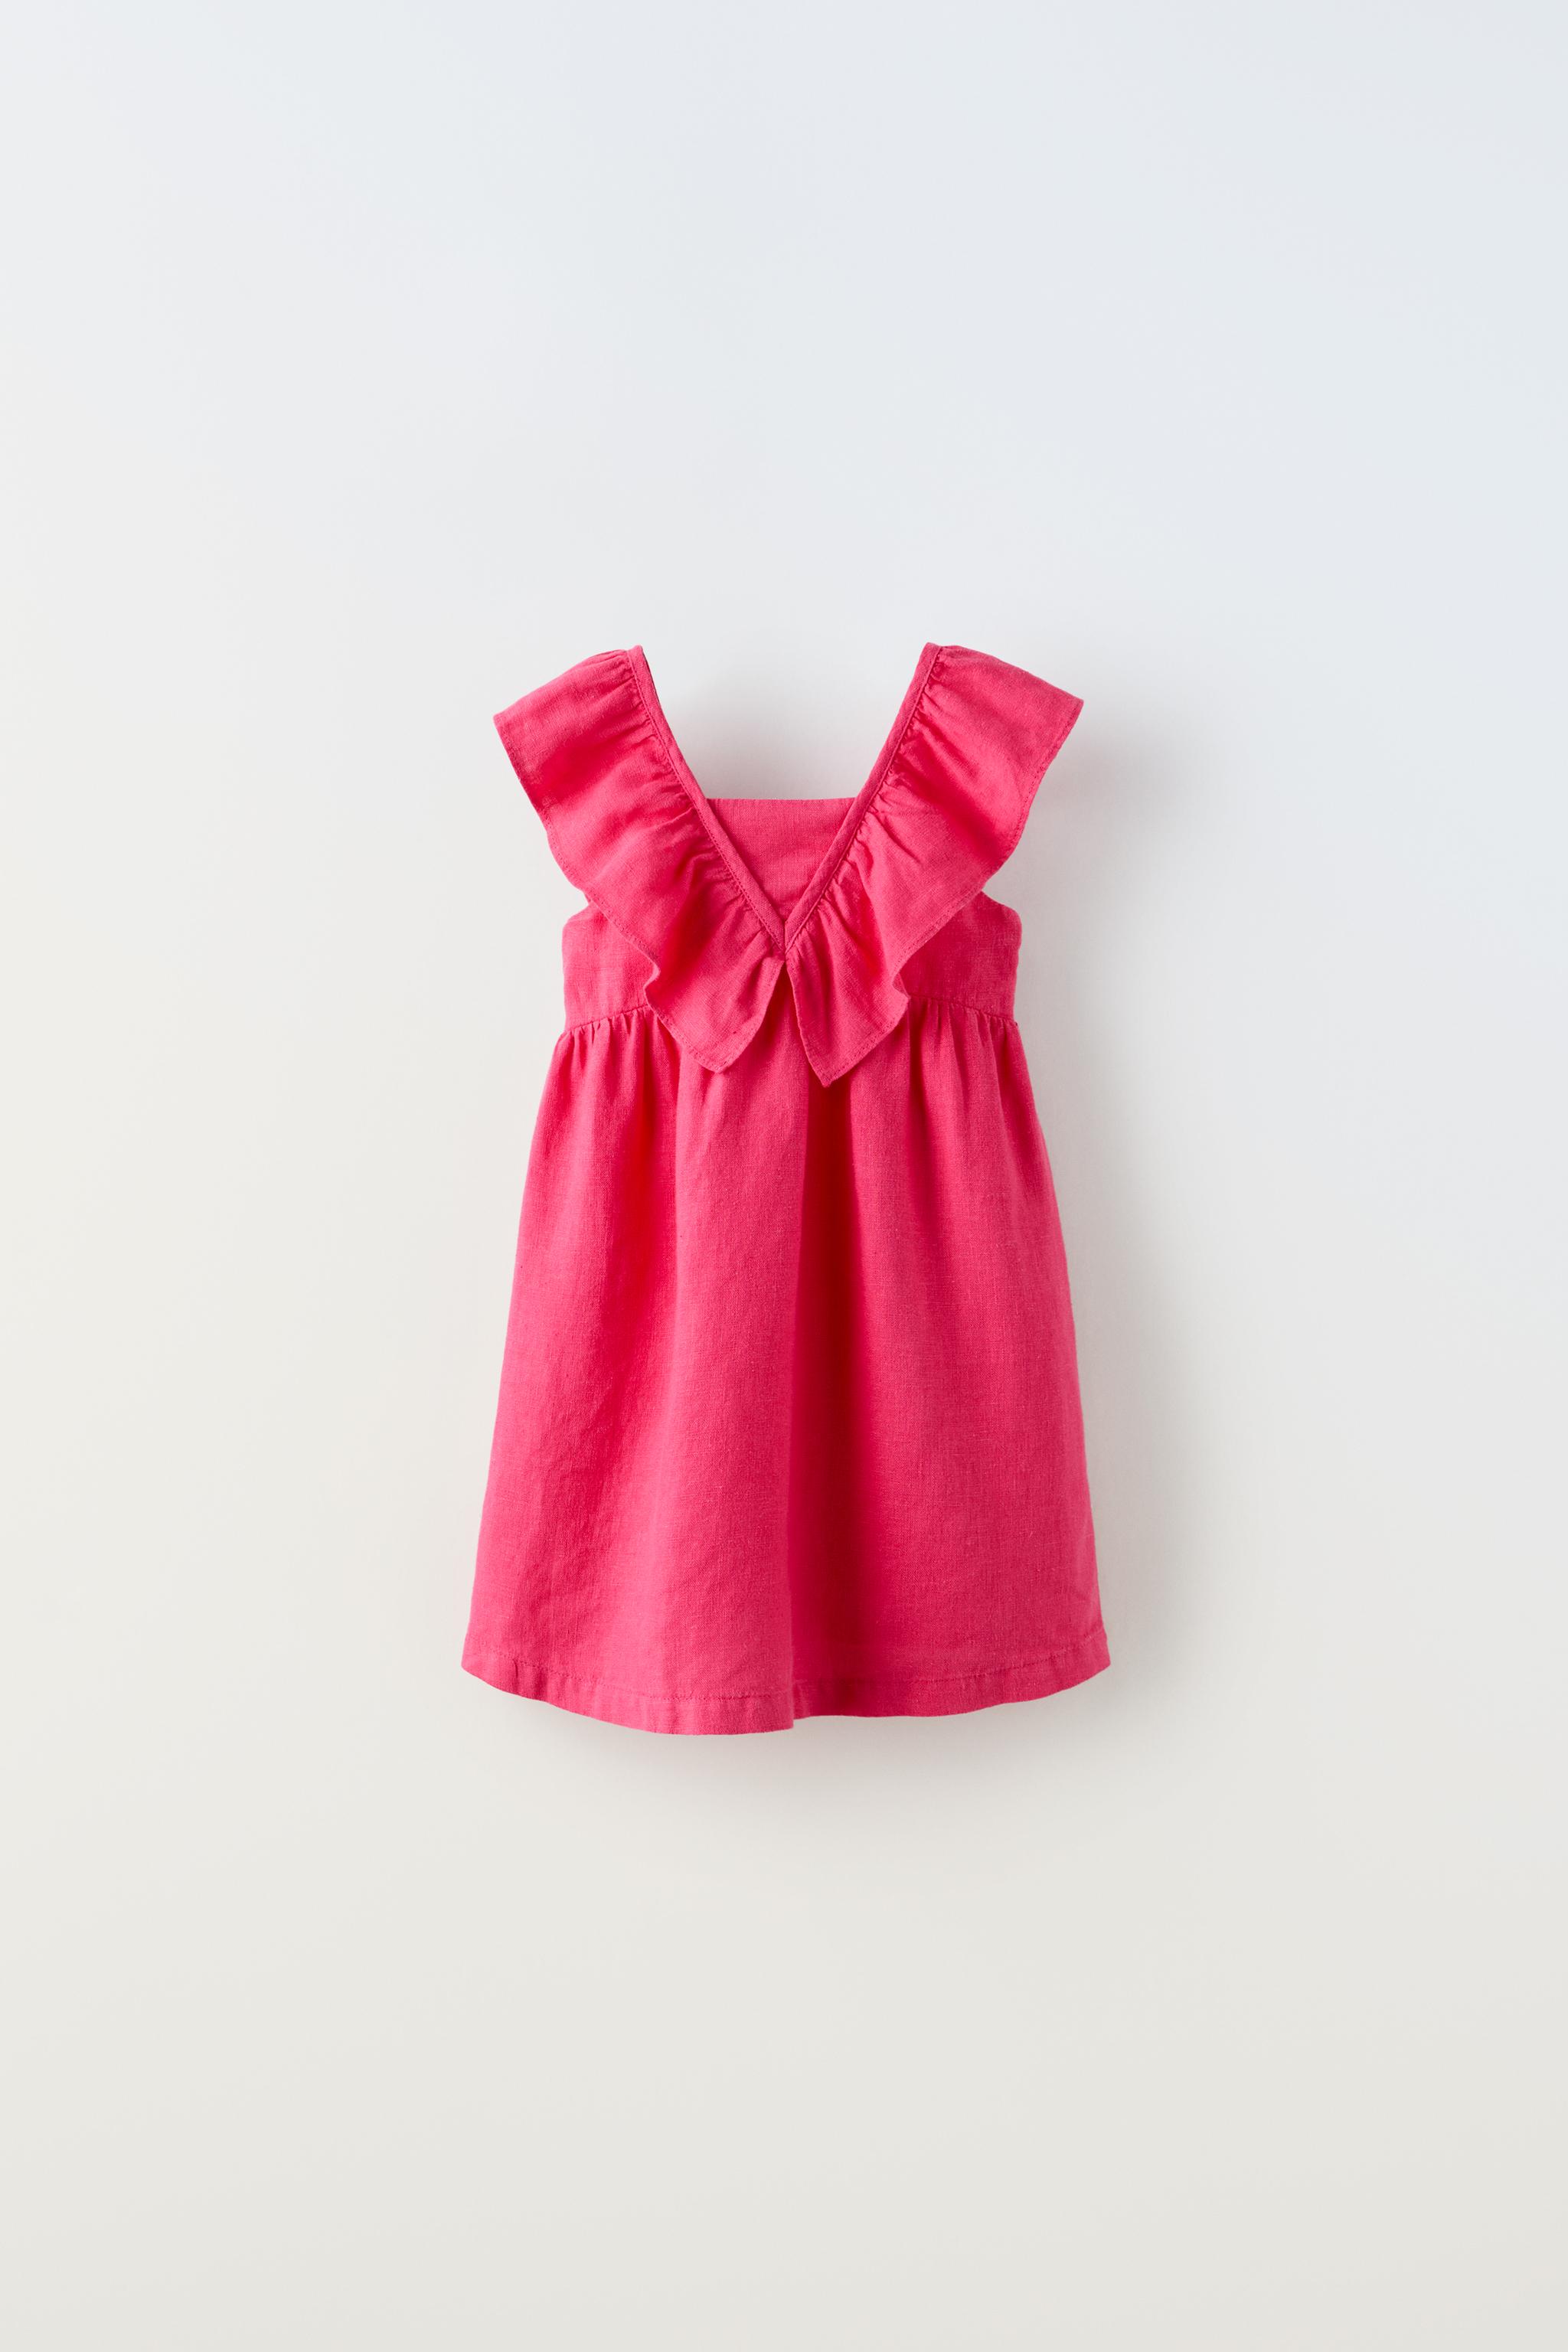 RUFFLED LINEN DRESS - Strawberry | ZARA United States